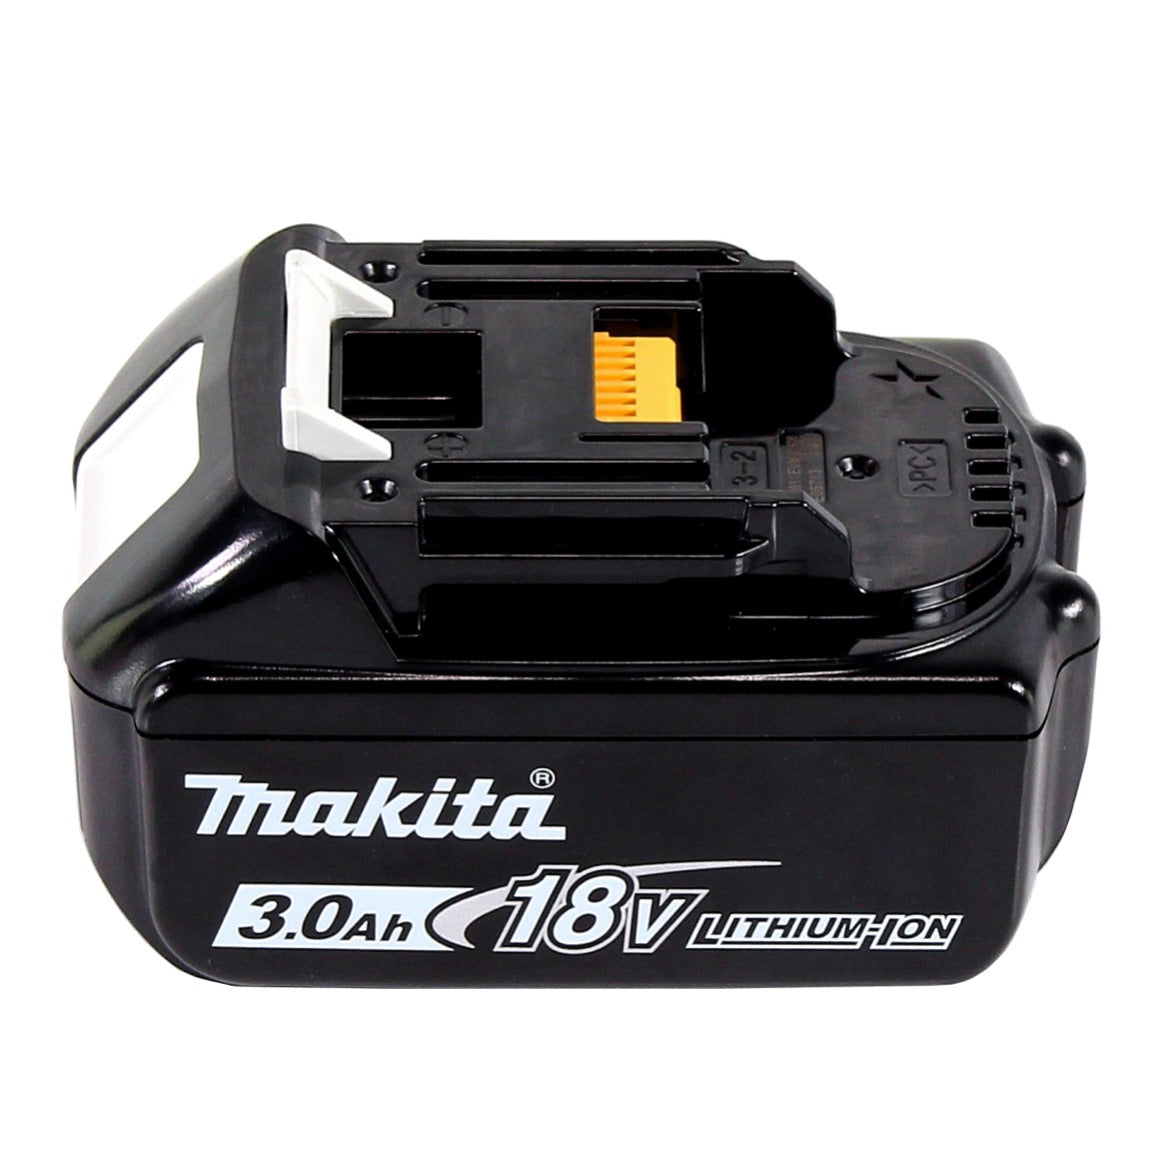 Makita DDF 485 F1 Akku Bohrschrauber 18 V 50 Nm Brushless + 1x Akku 3,0 Ah - ohne Ladegerät - Toolbrothers